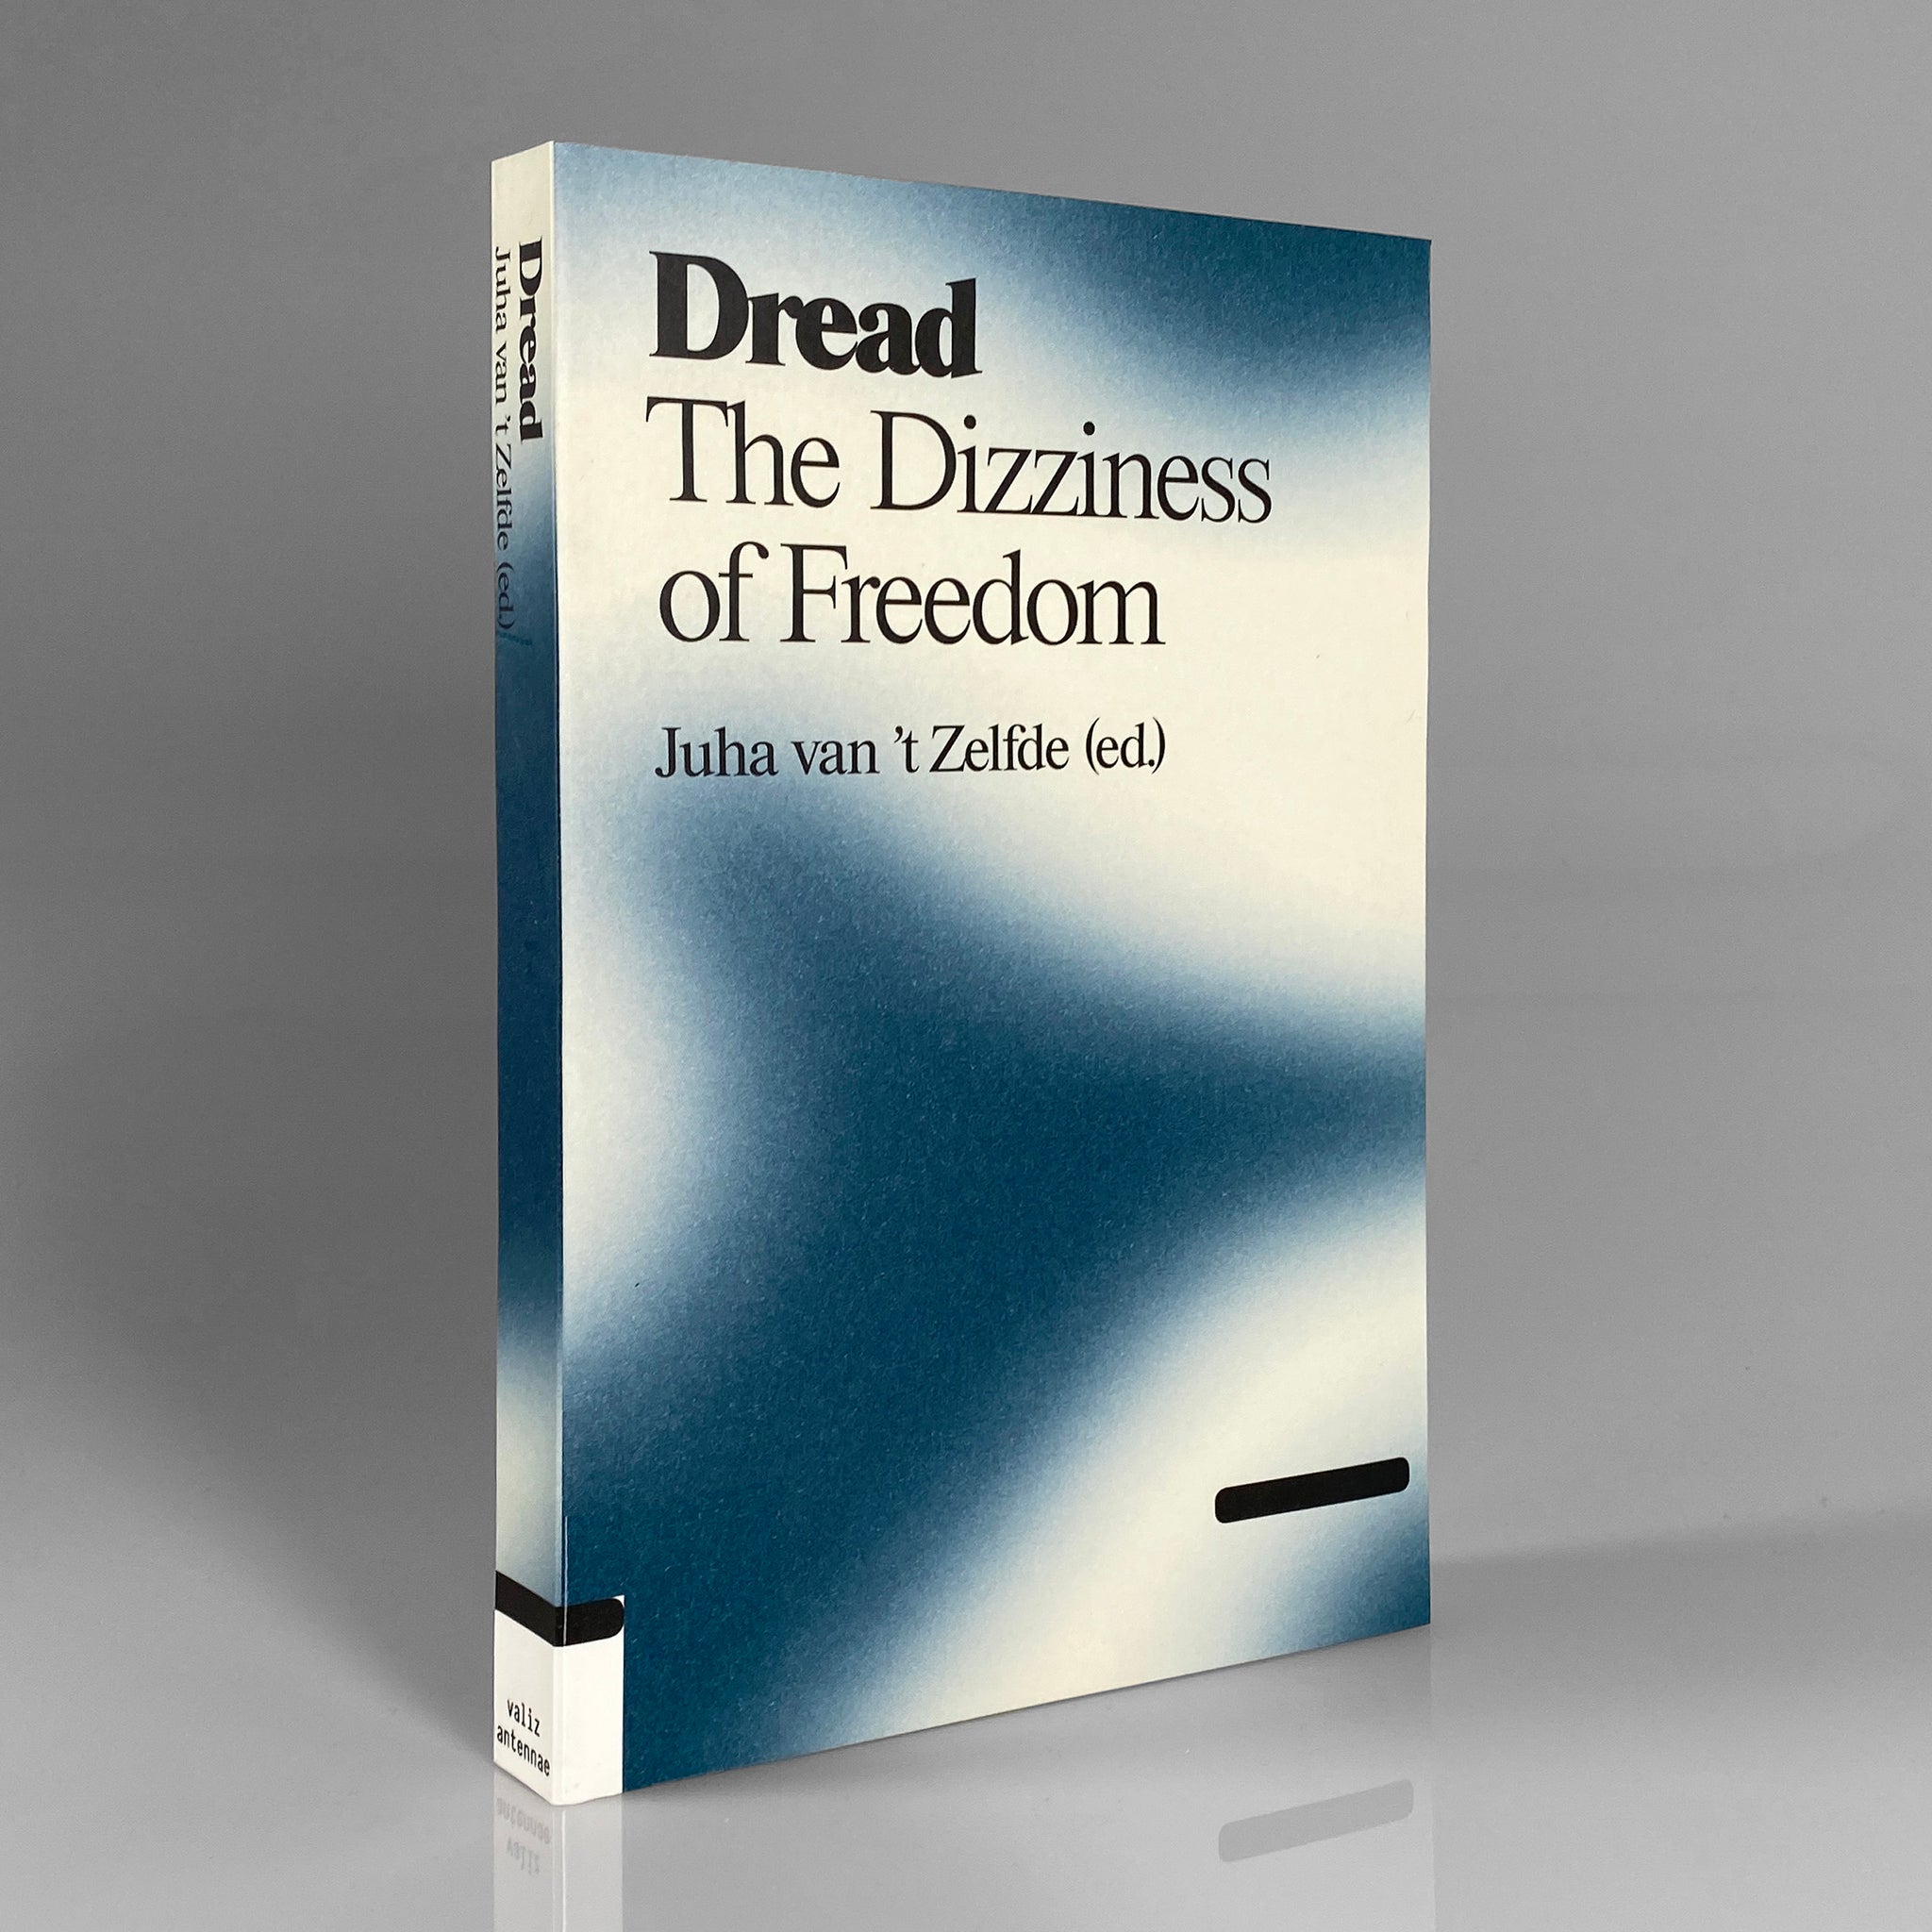 Dread: The Dizziness of Freedom